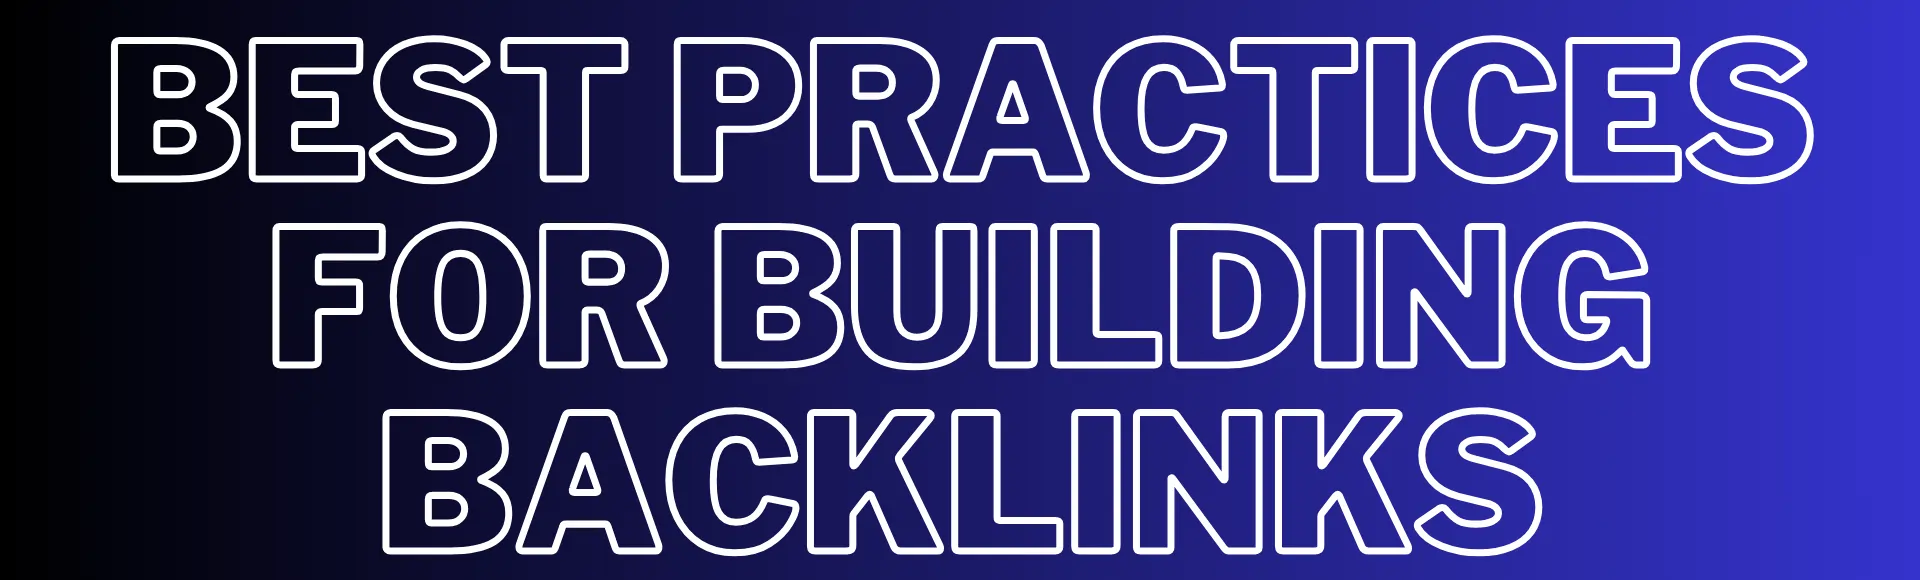 Best Practices for Building Backlinks